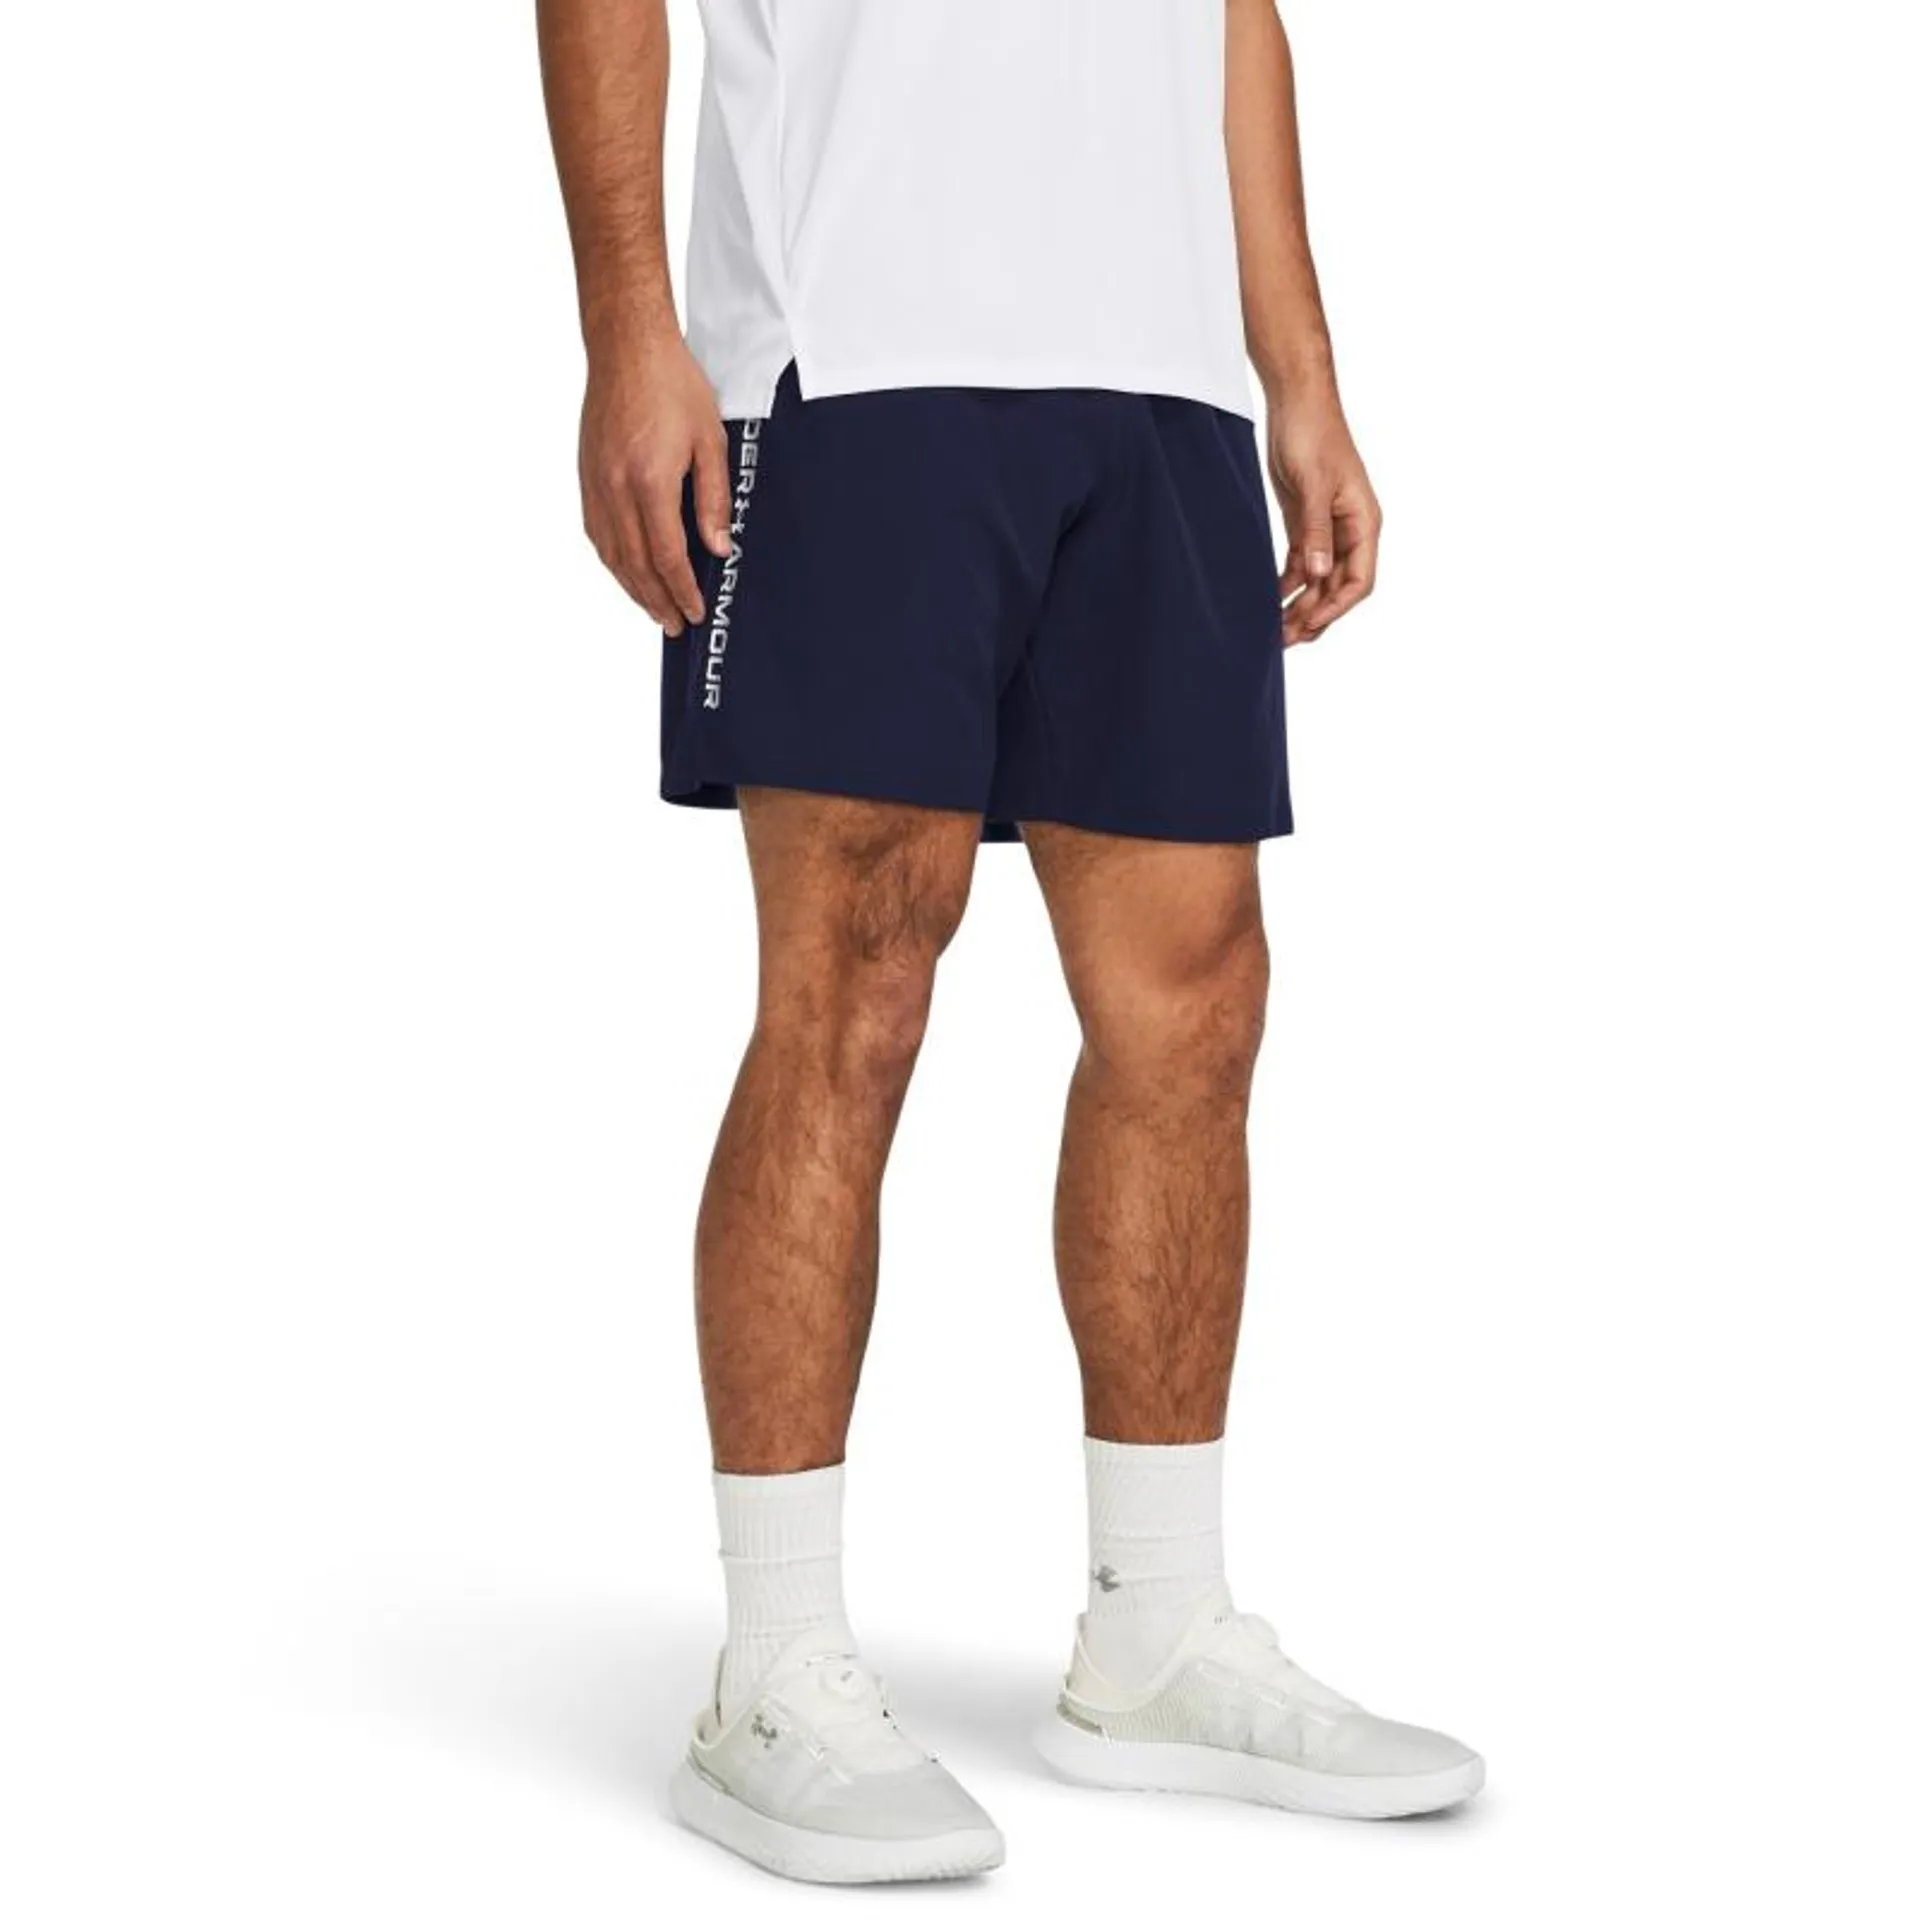 UA Woven Wdmk Shorts-BLU